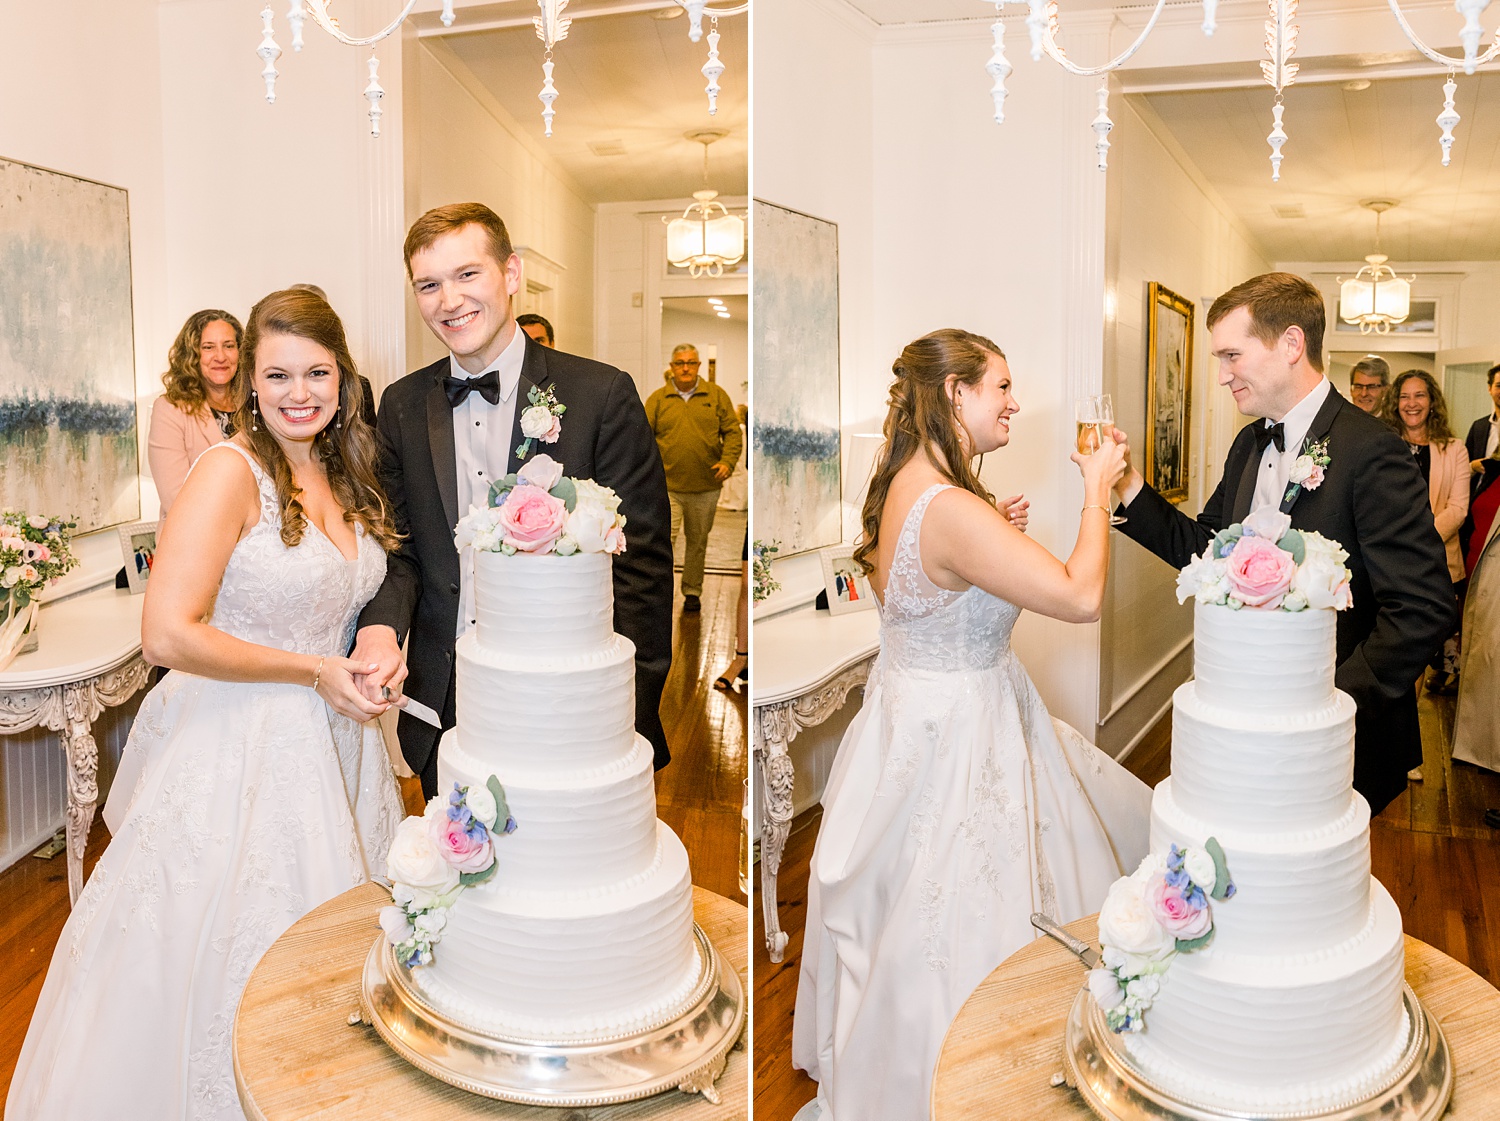 newlyweds cut wedding cake during Alabama wedding reception